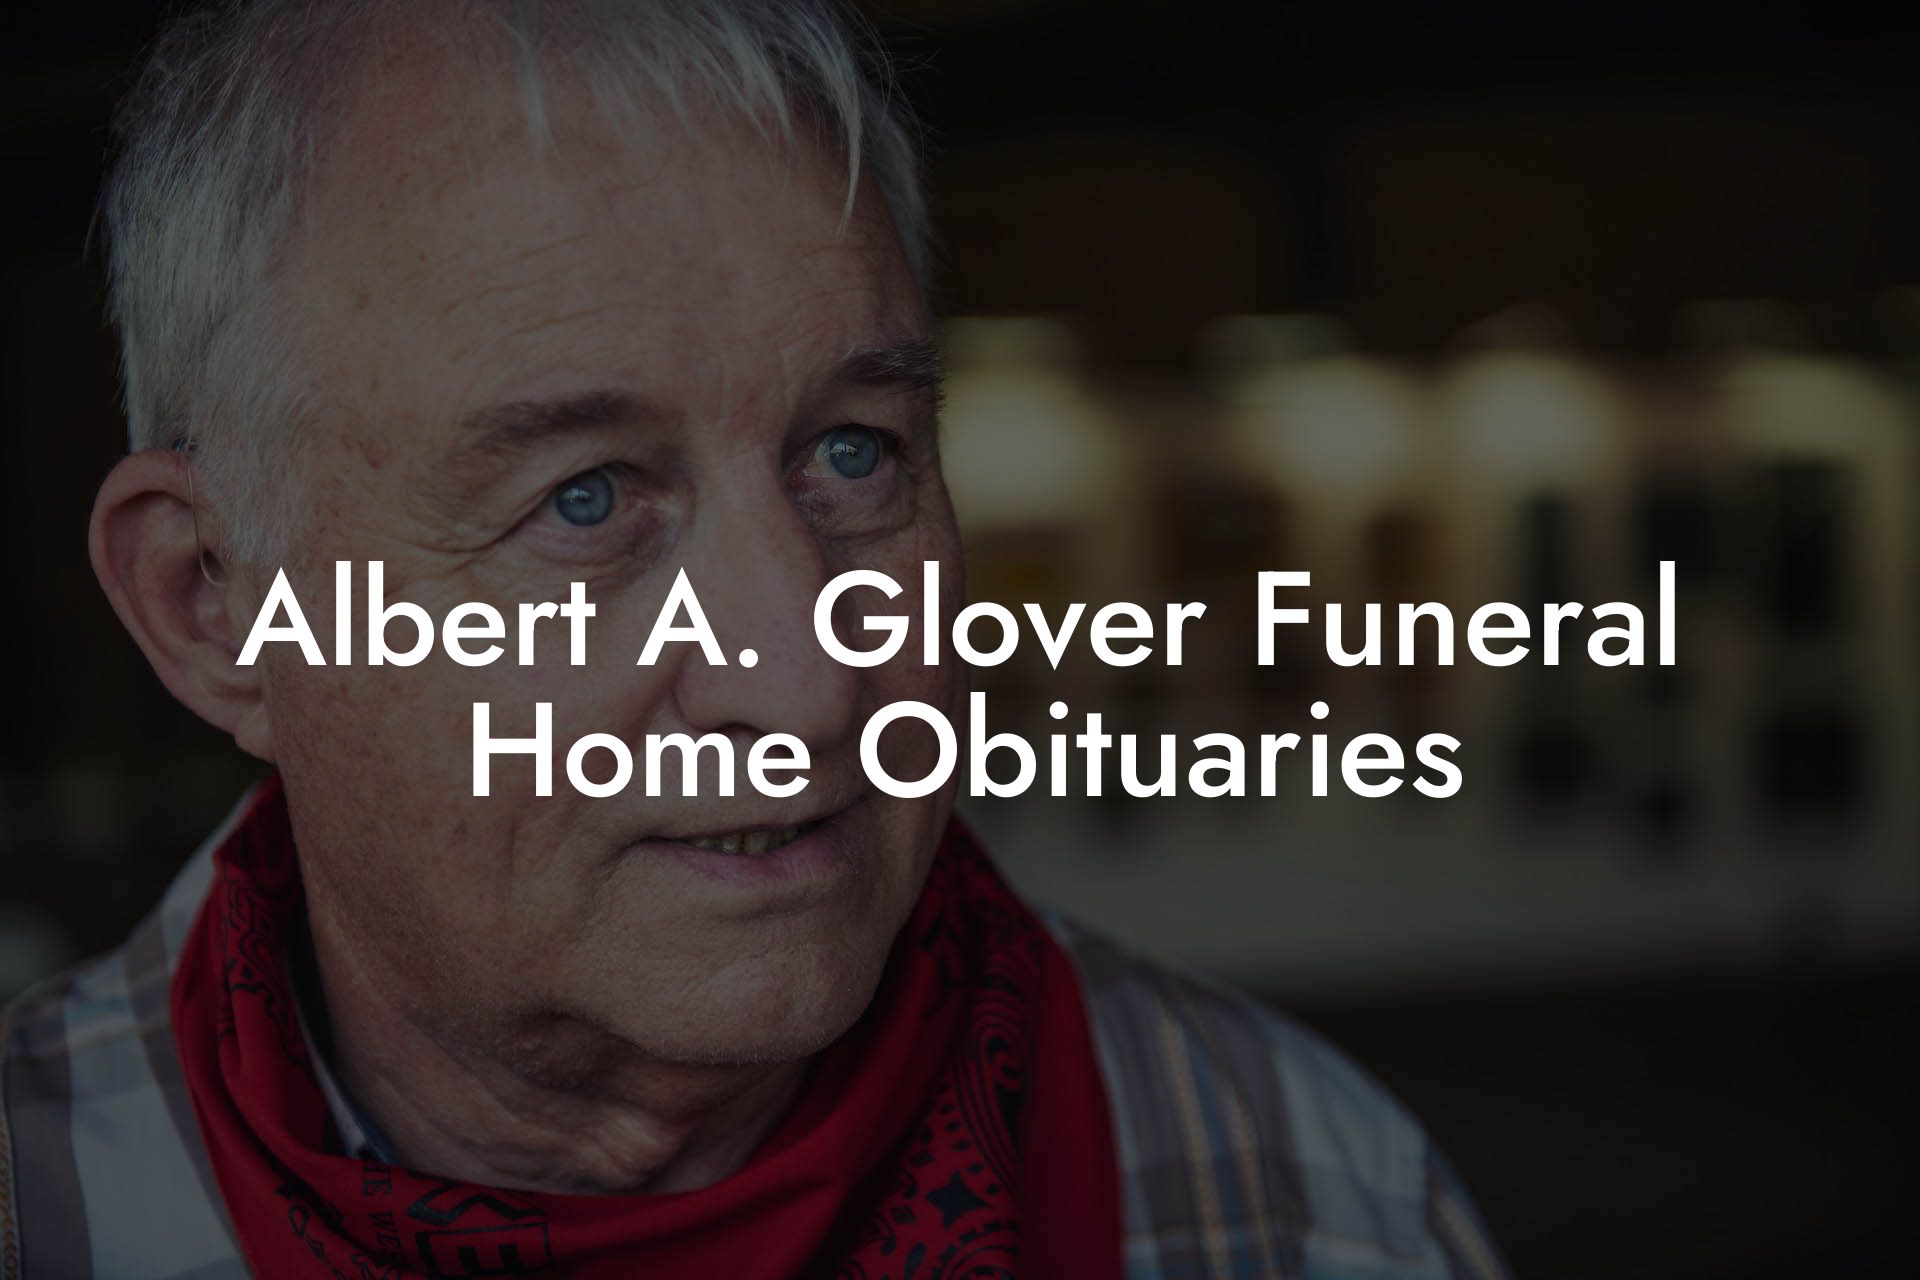 Albert A. Glover Funeral Home Obituaries